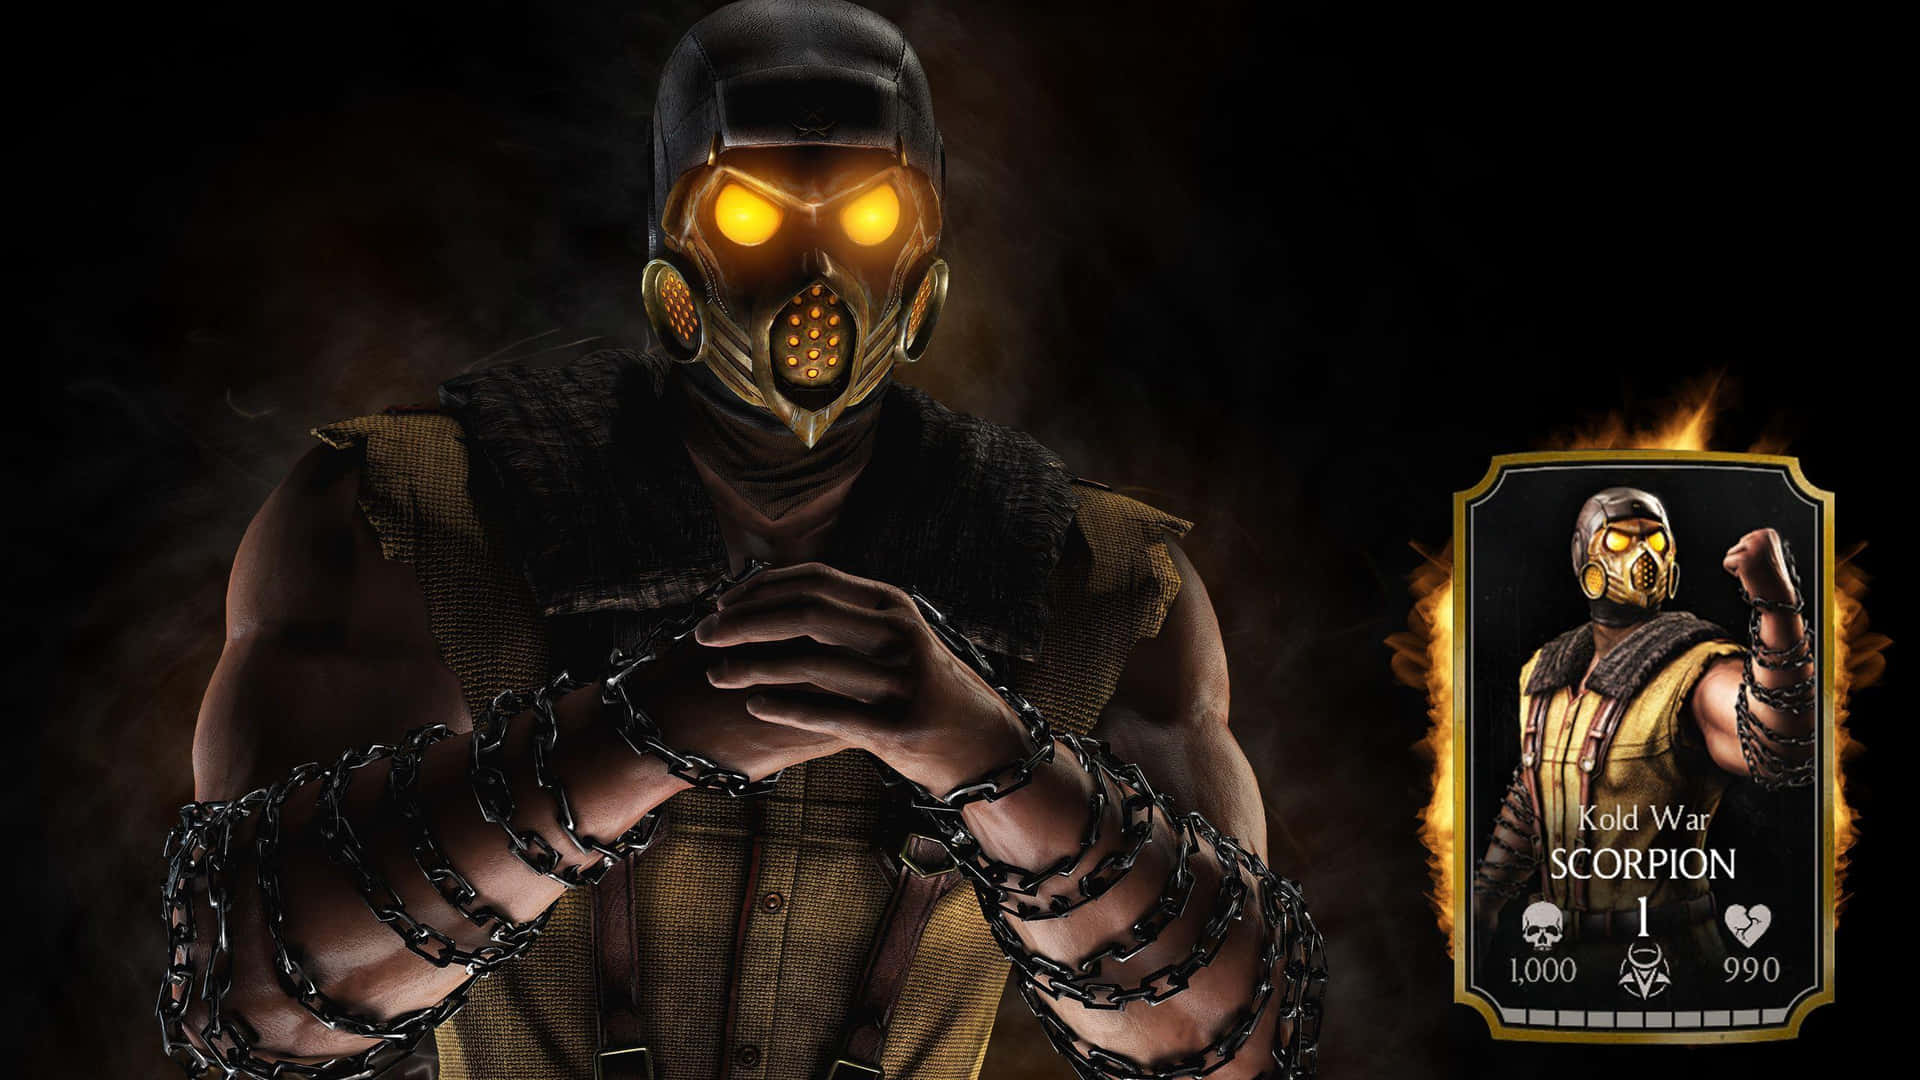 Epic Mortal Kombat X Battle Featuring Scorpion And Sub-zero